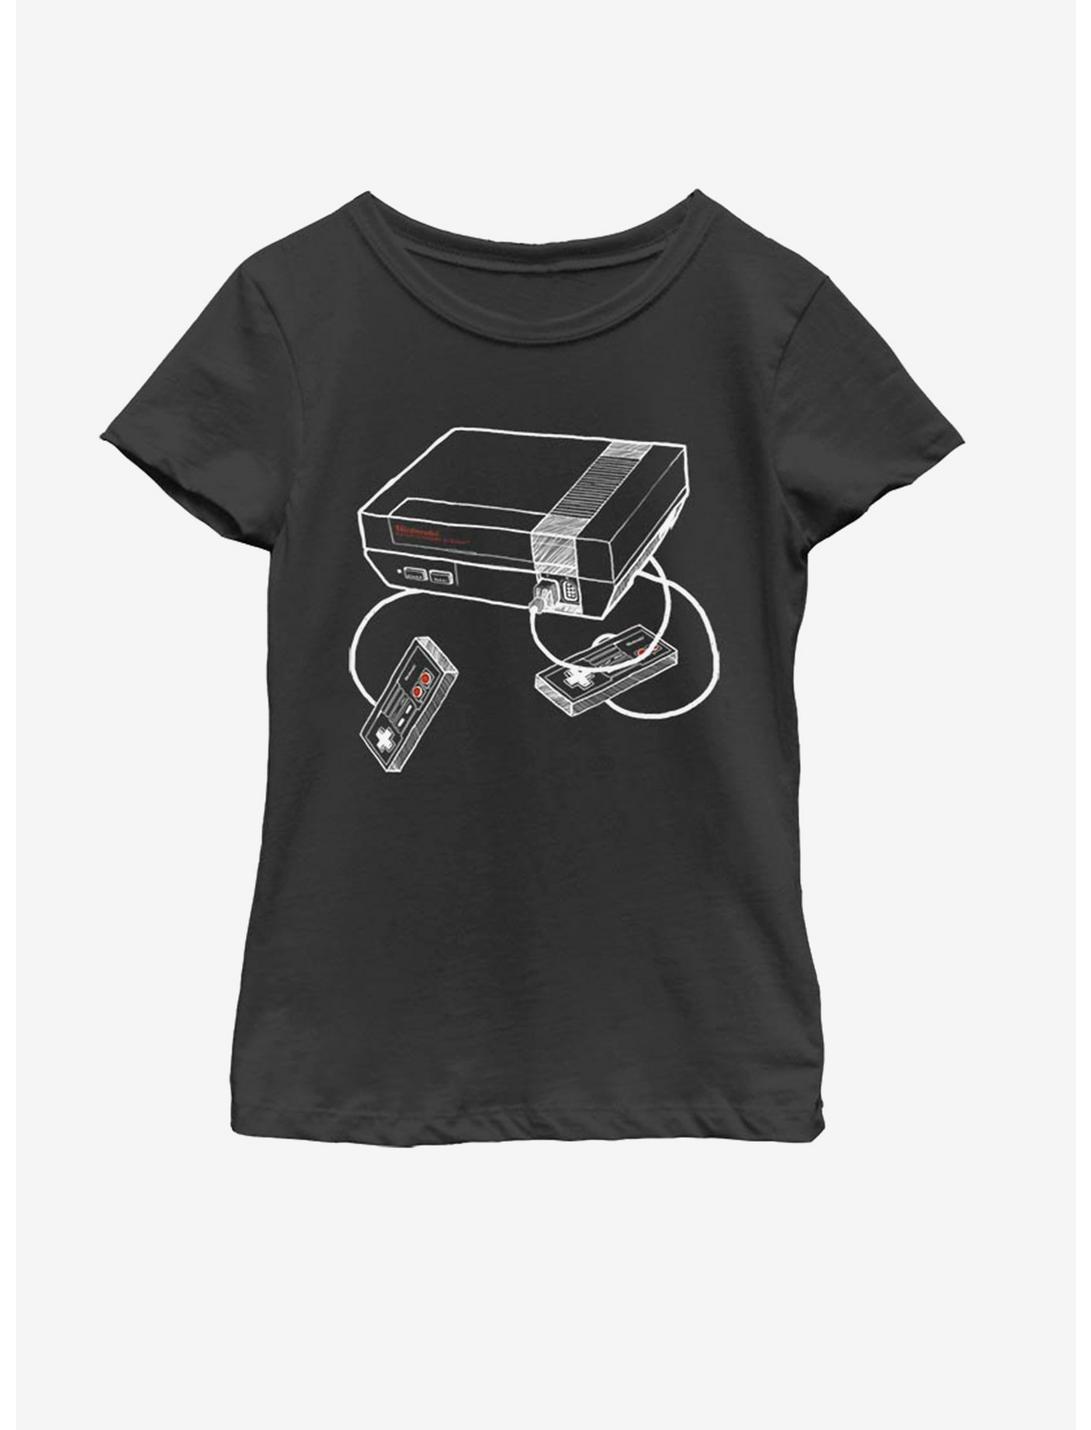 Nintendo Sketch Console Youth Girls T-Shirt, BLACK, hi-res